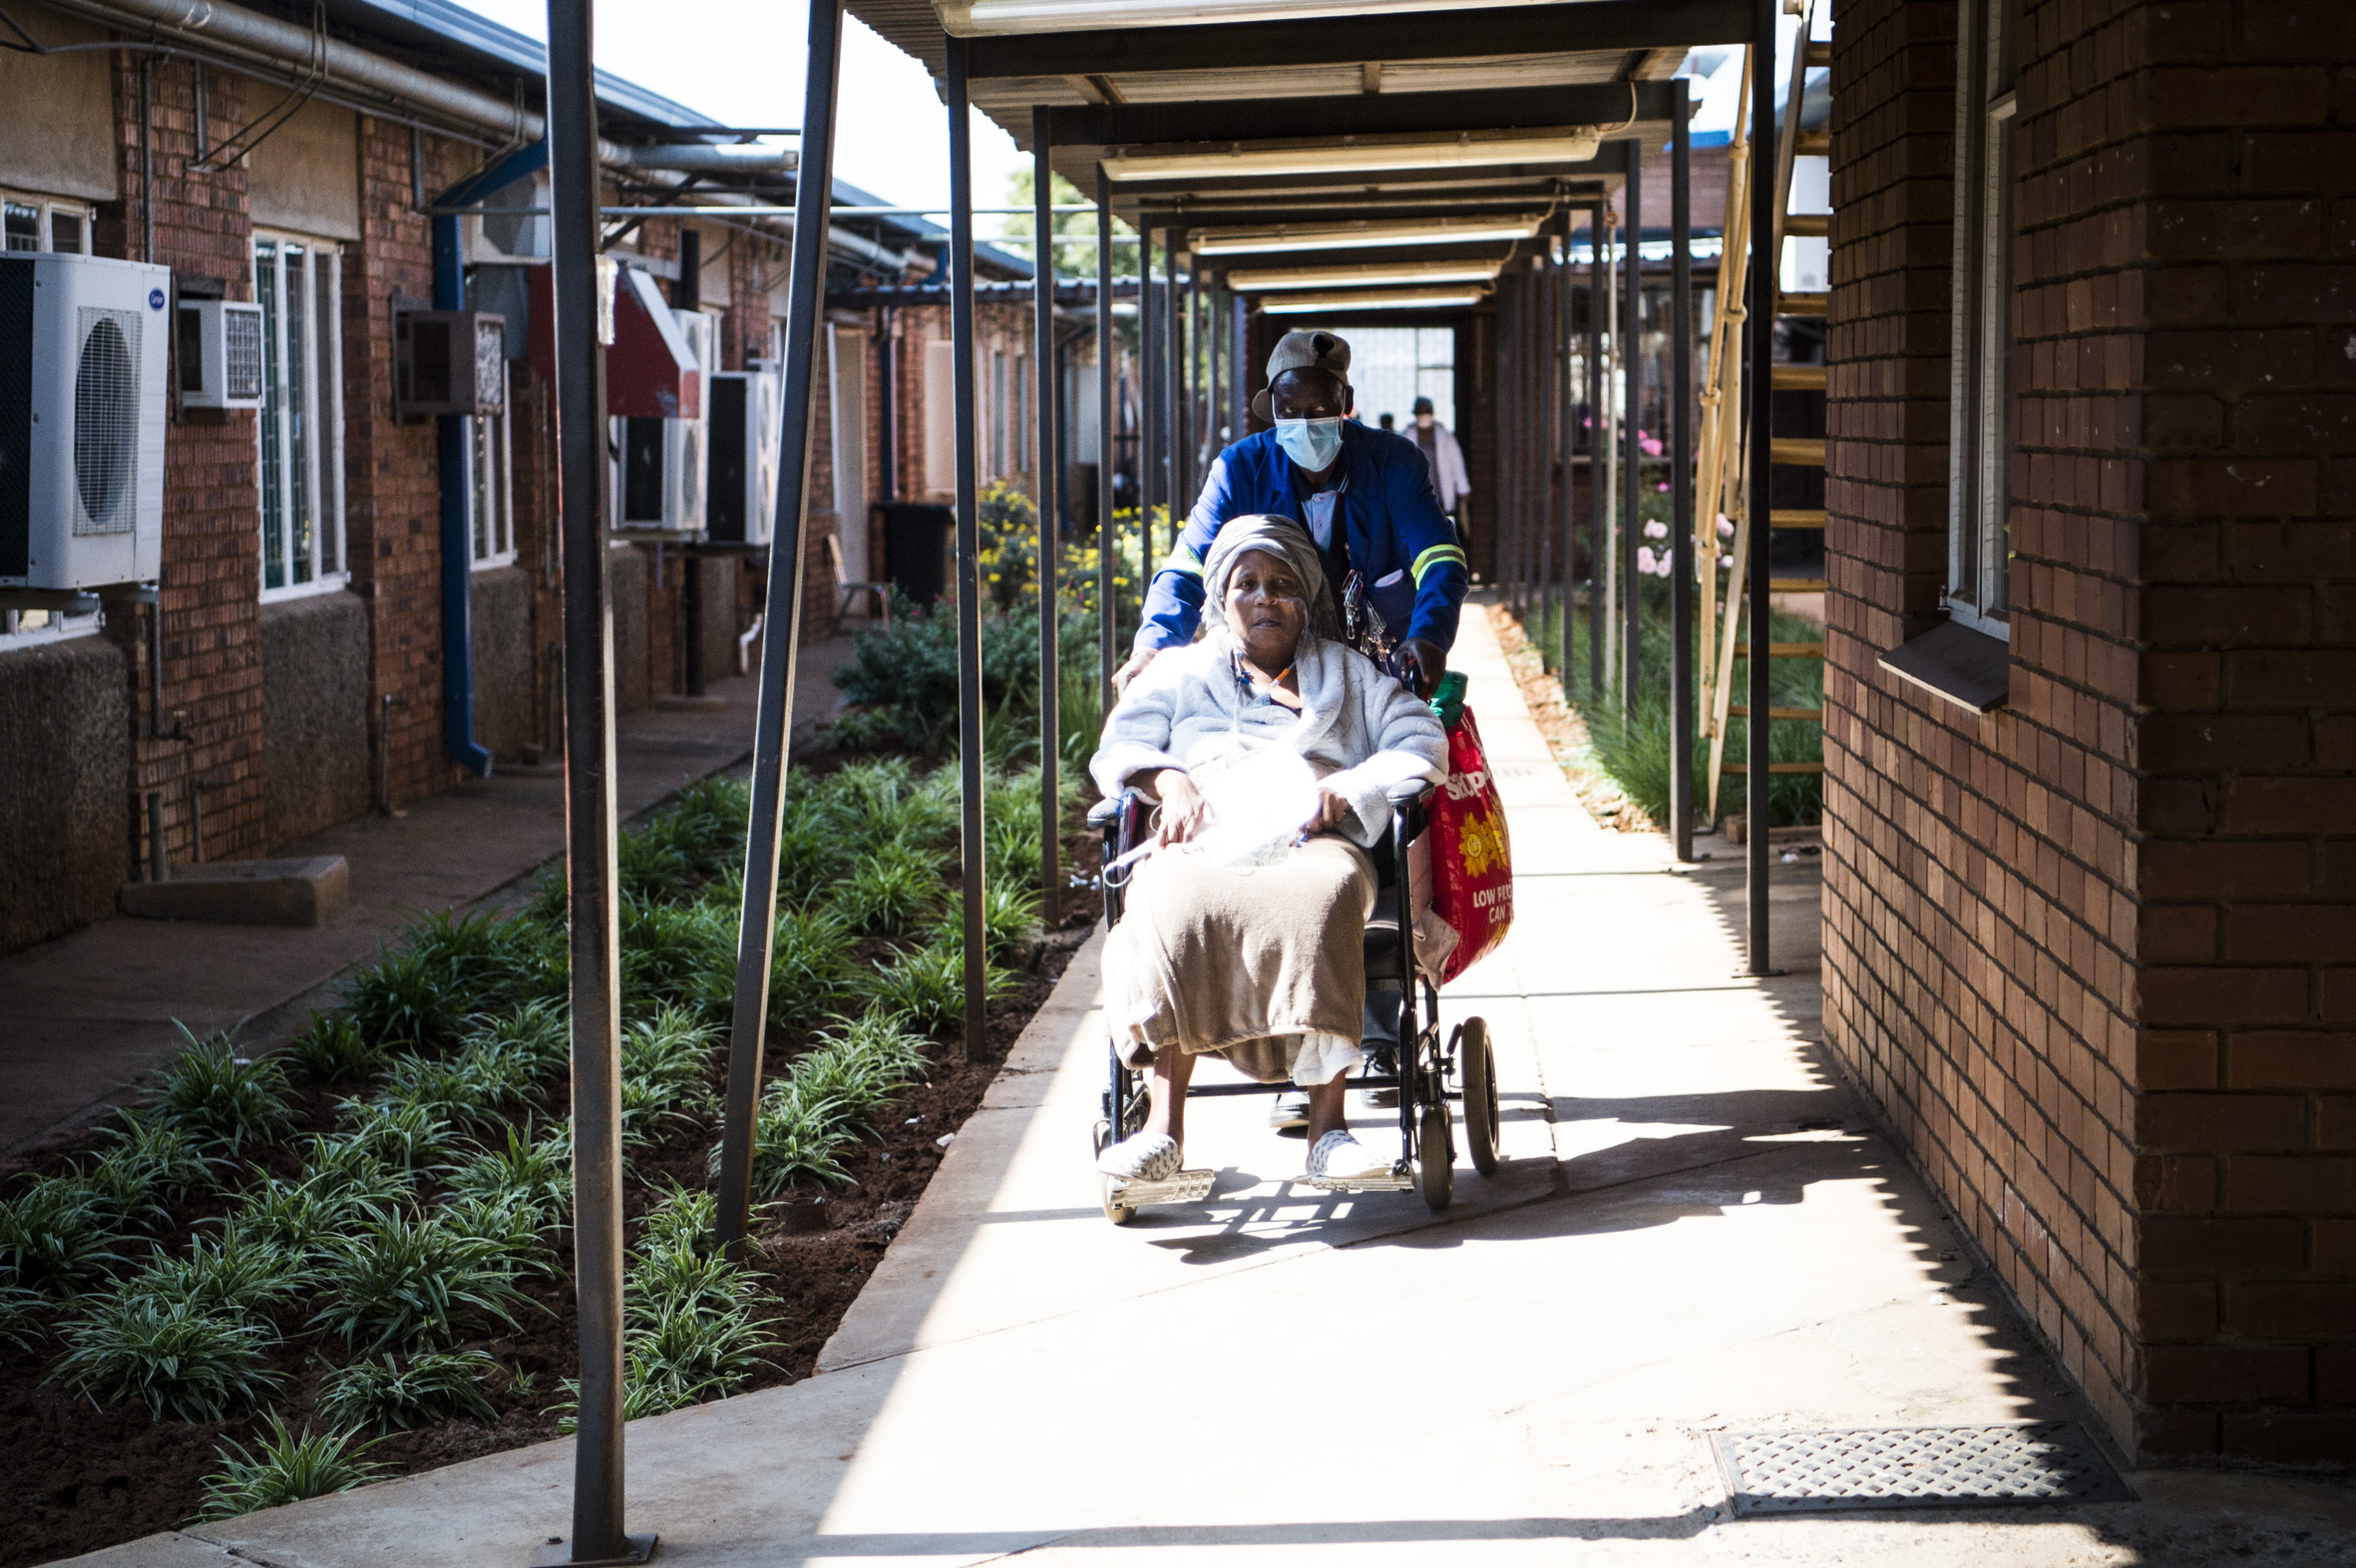 World Health Day: SA’s public health sector facing crisis amid budget cuts